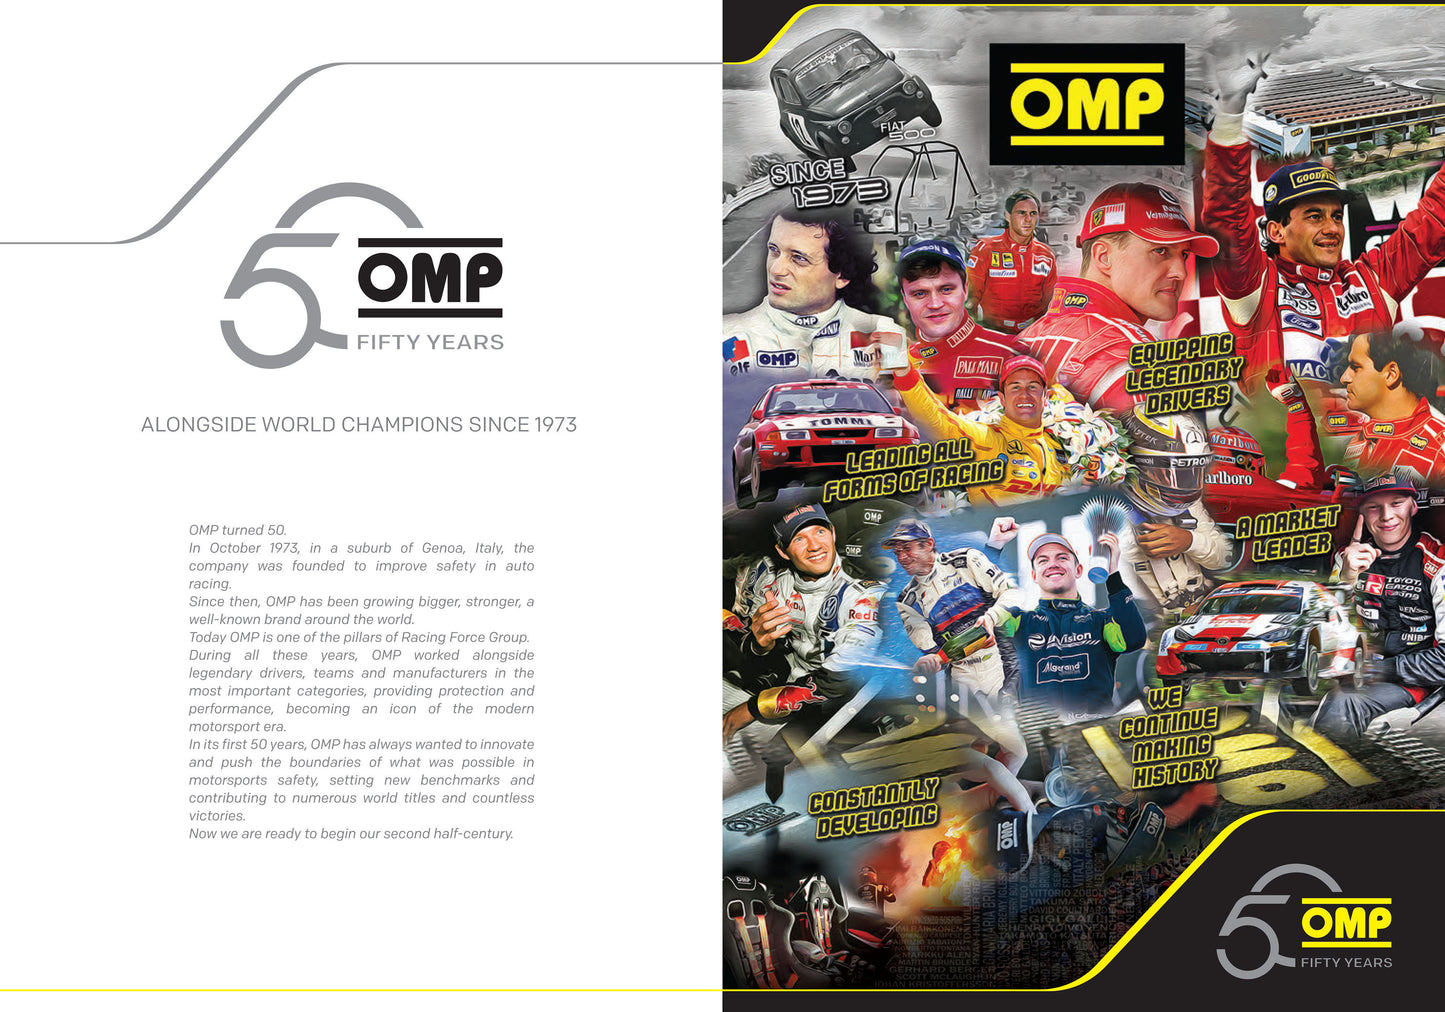 OMP Tecnica Evo Balaclava Fireproof Underwear Race Rally FIA 8856-2018 Approved